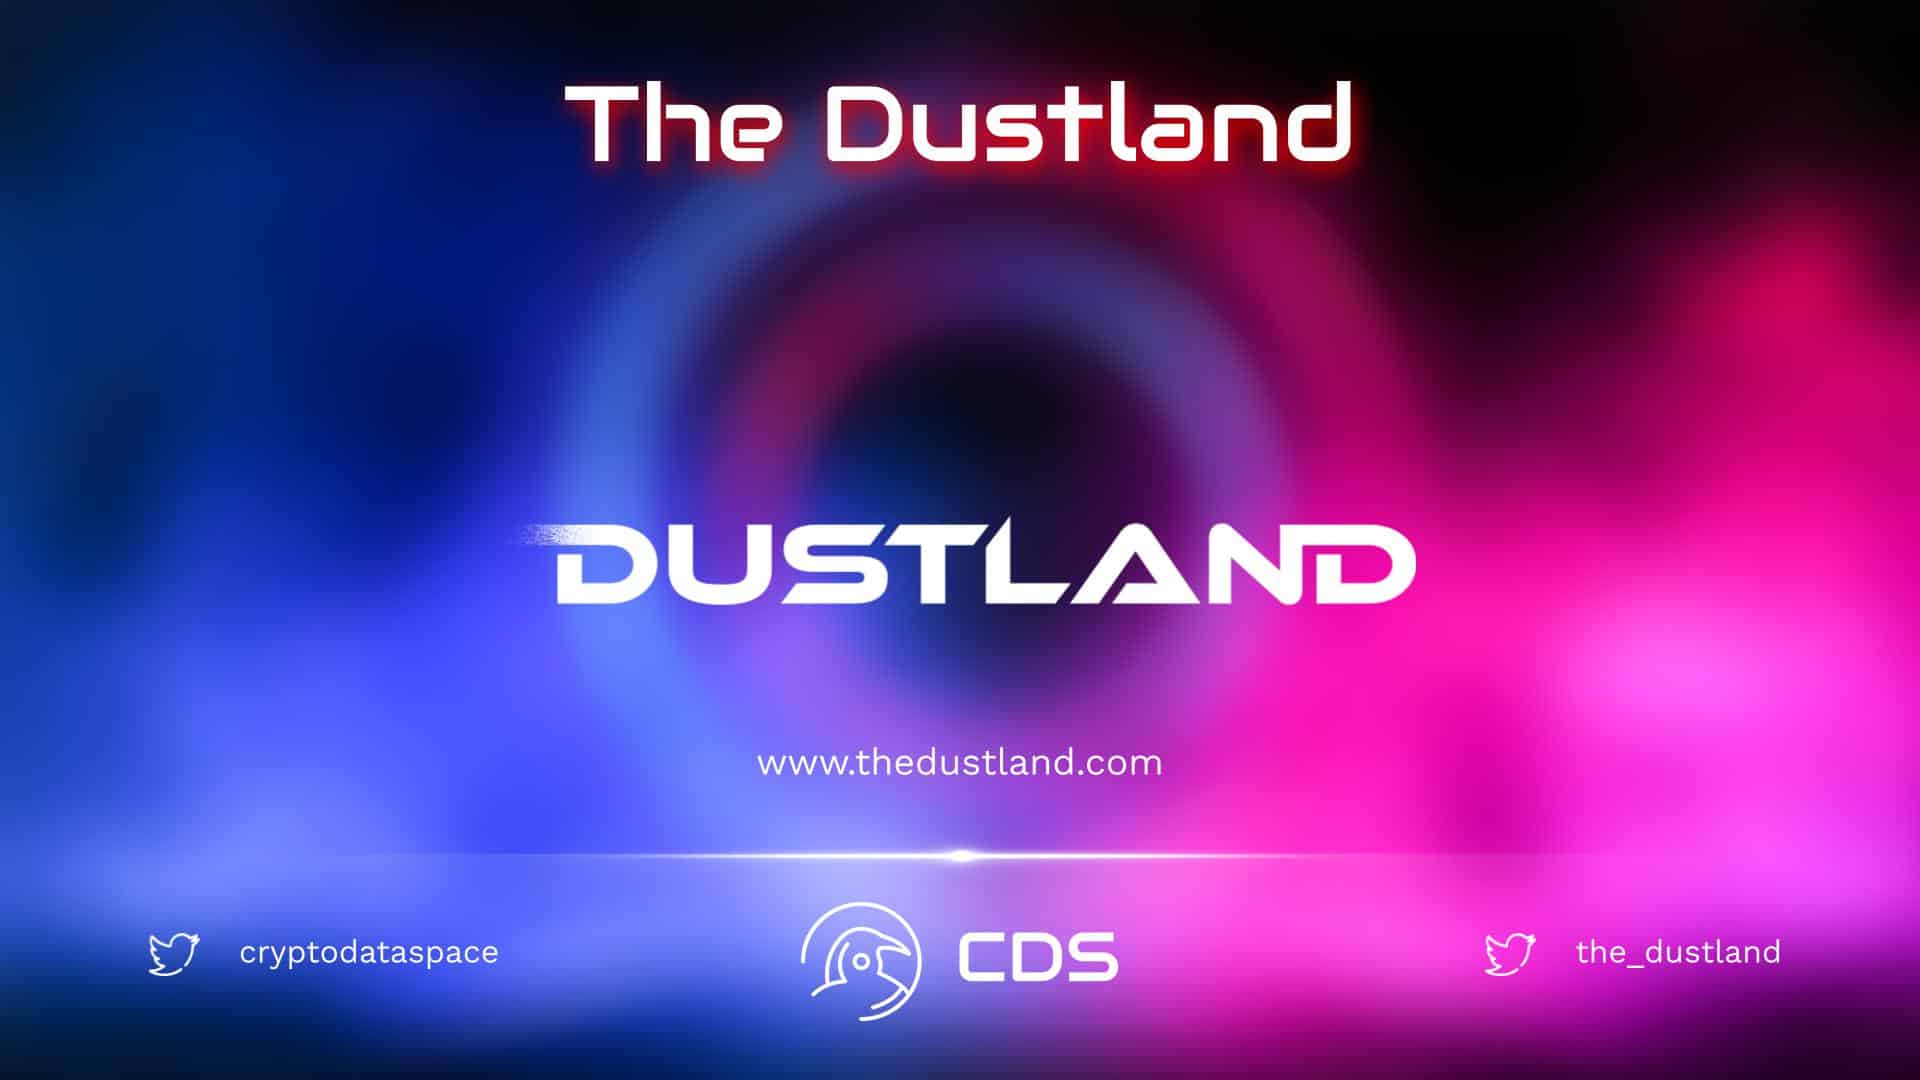 The Dustland